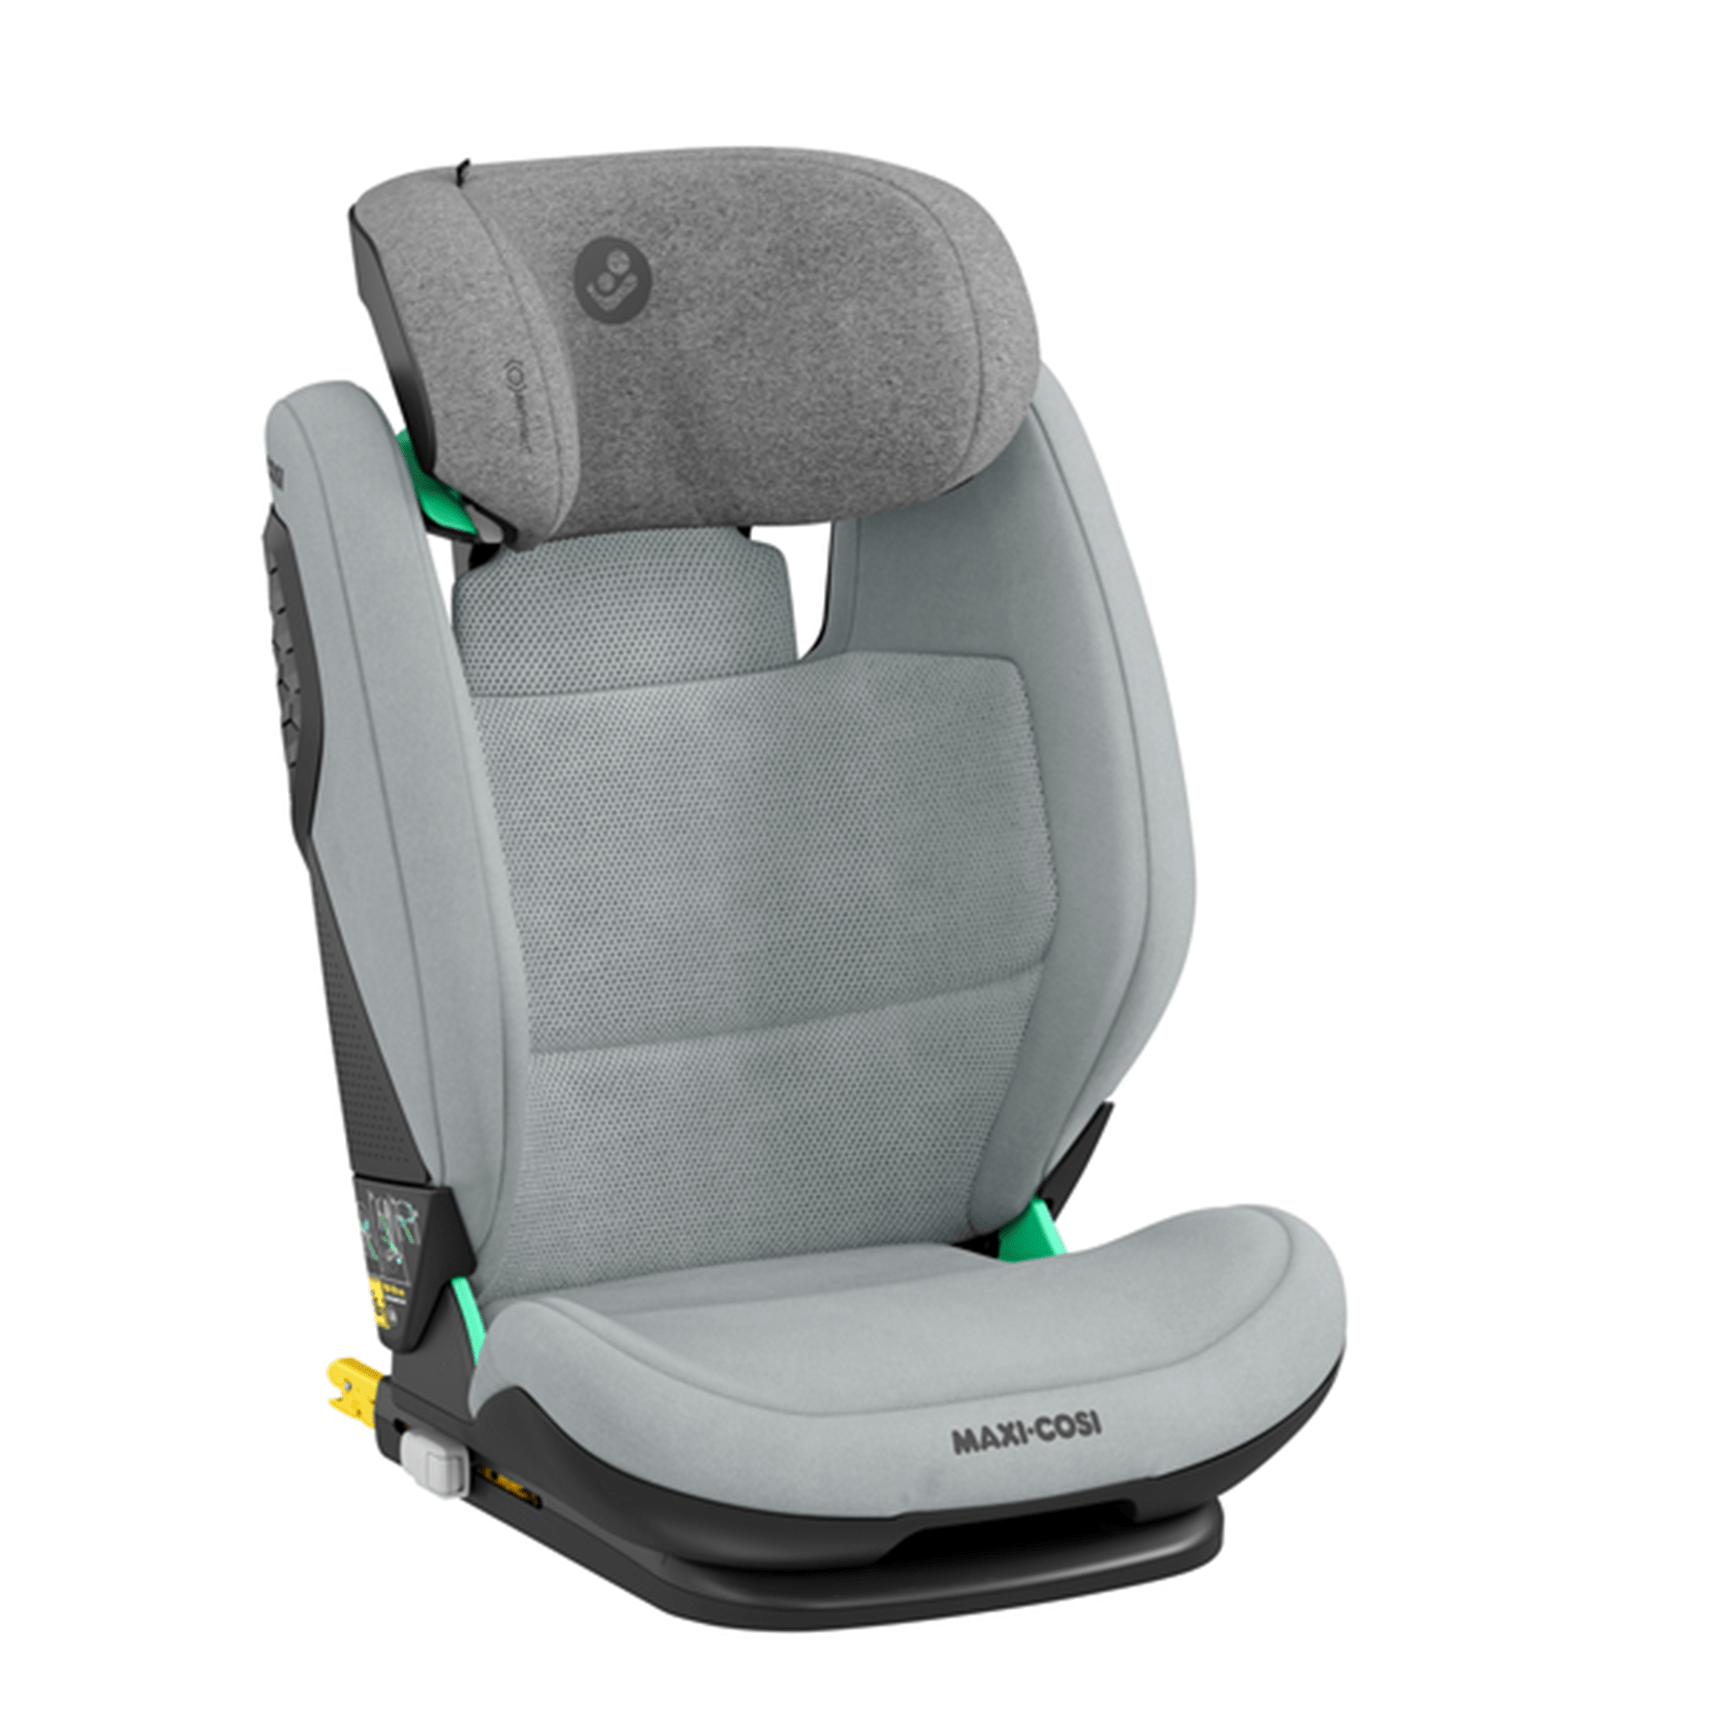 Maxi-Cosi baby car seats Maxi-Cosi Rodifix Pro i-size Car Seat - Authenic Grey 8800510110